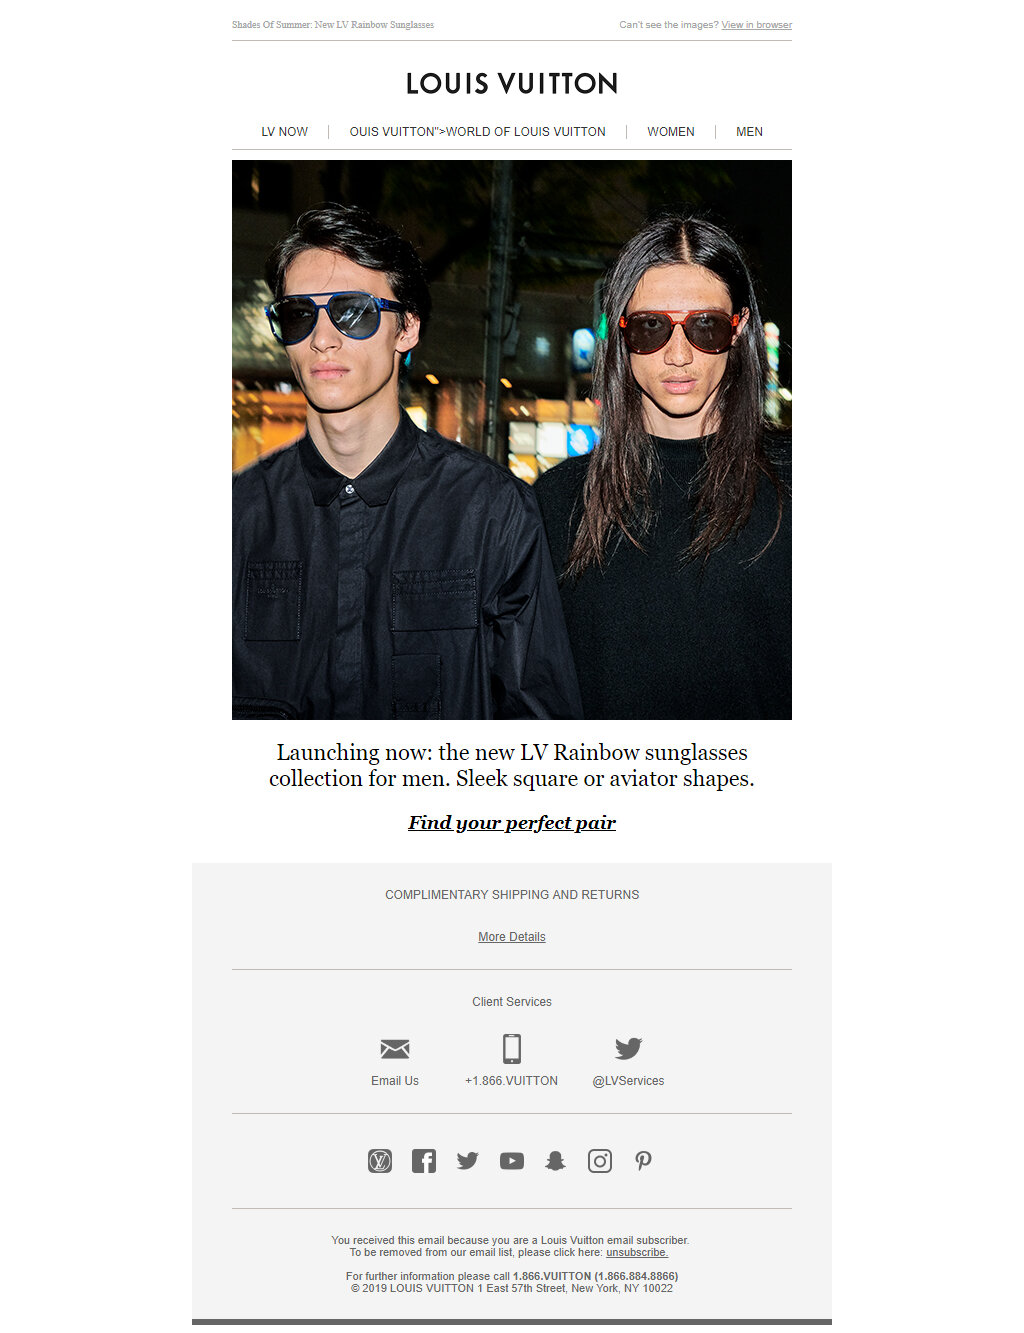 Louis Vuitton releases a new collection of men's sunglasses – Louis Vuitton  Rainbow - The Glass Magazine